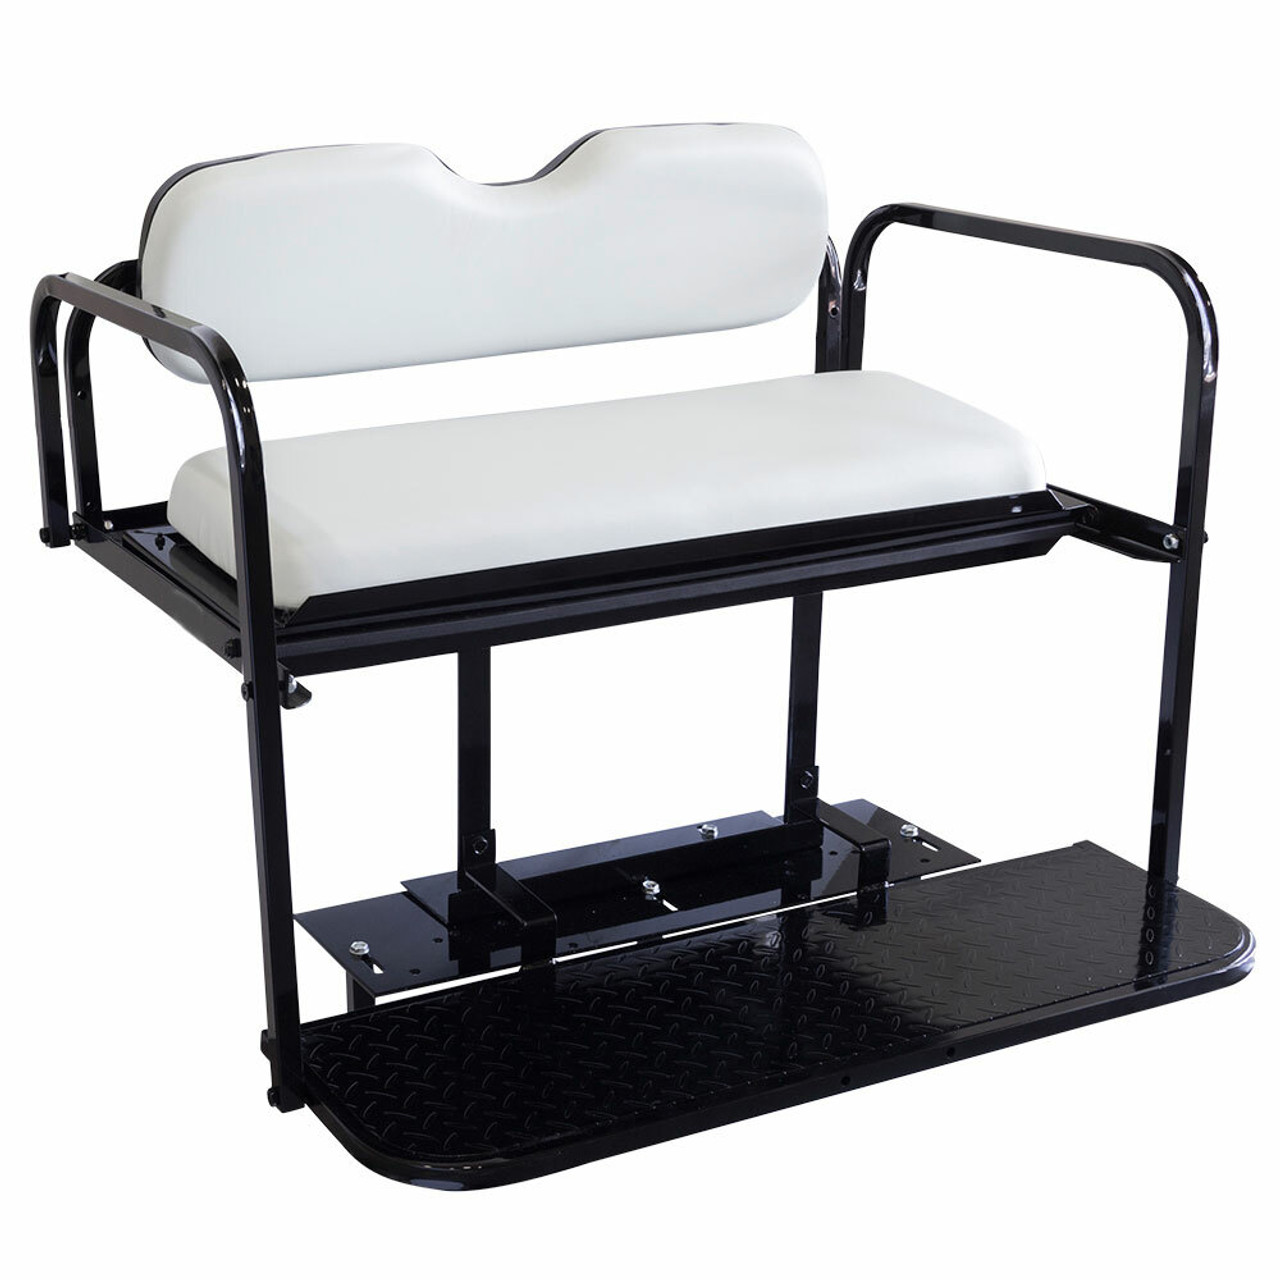 EZGO TXT/Medalist Golf Cart Seat Bottom Cushion (Black)